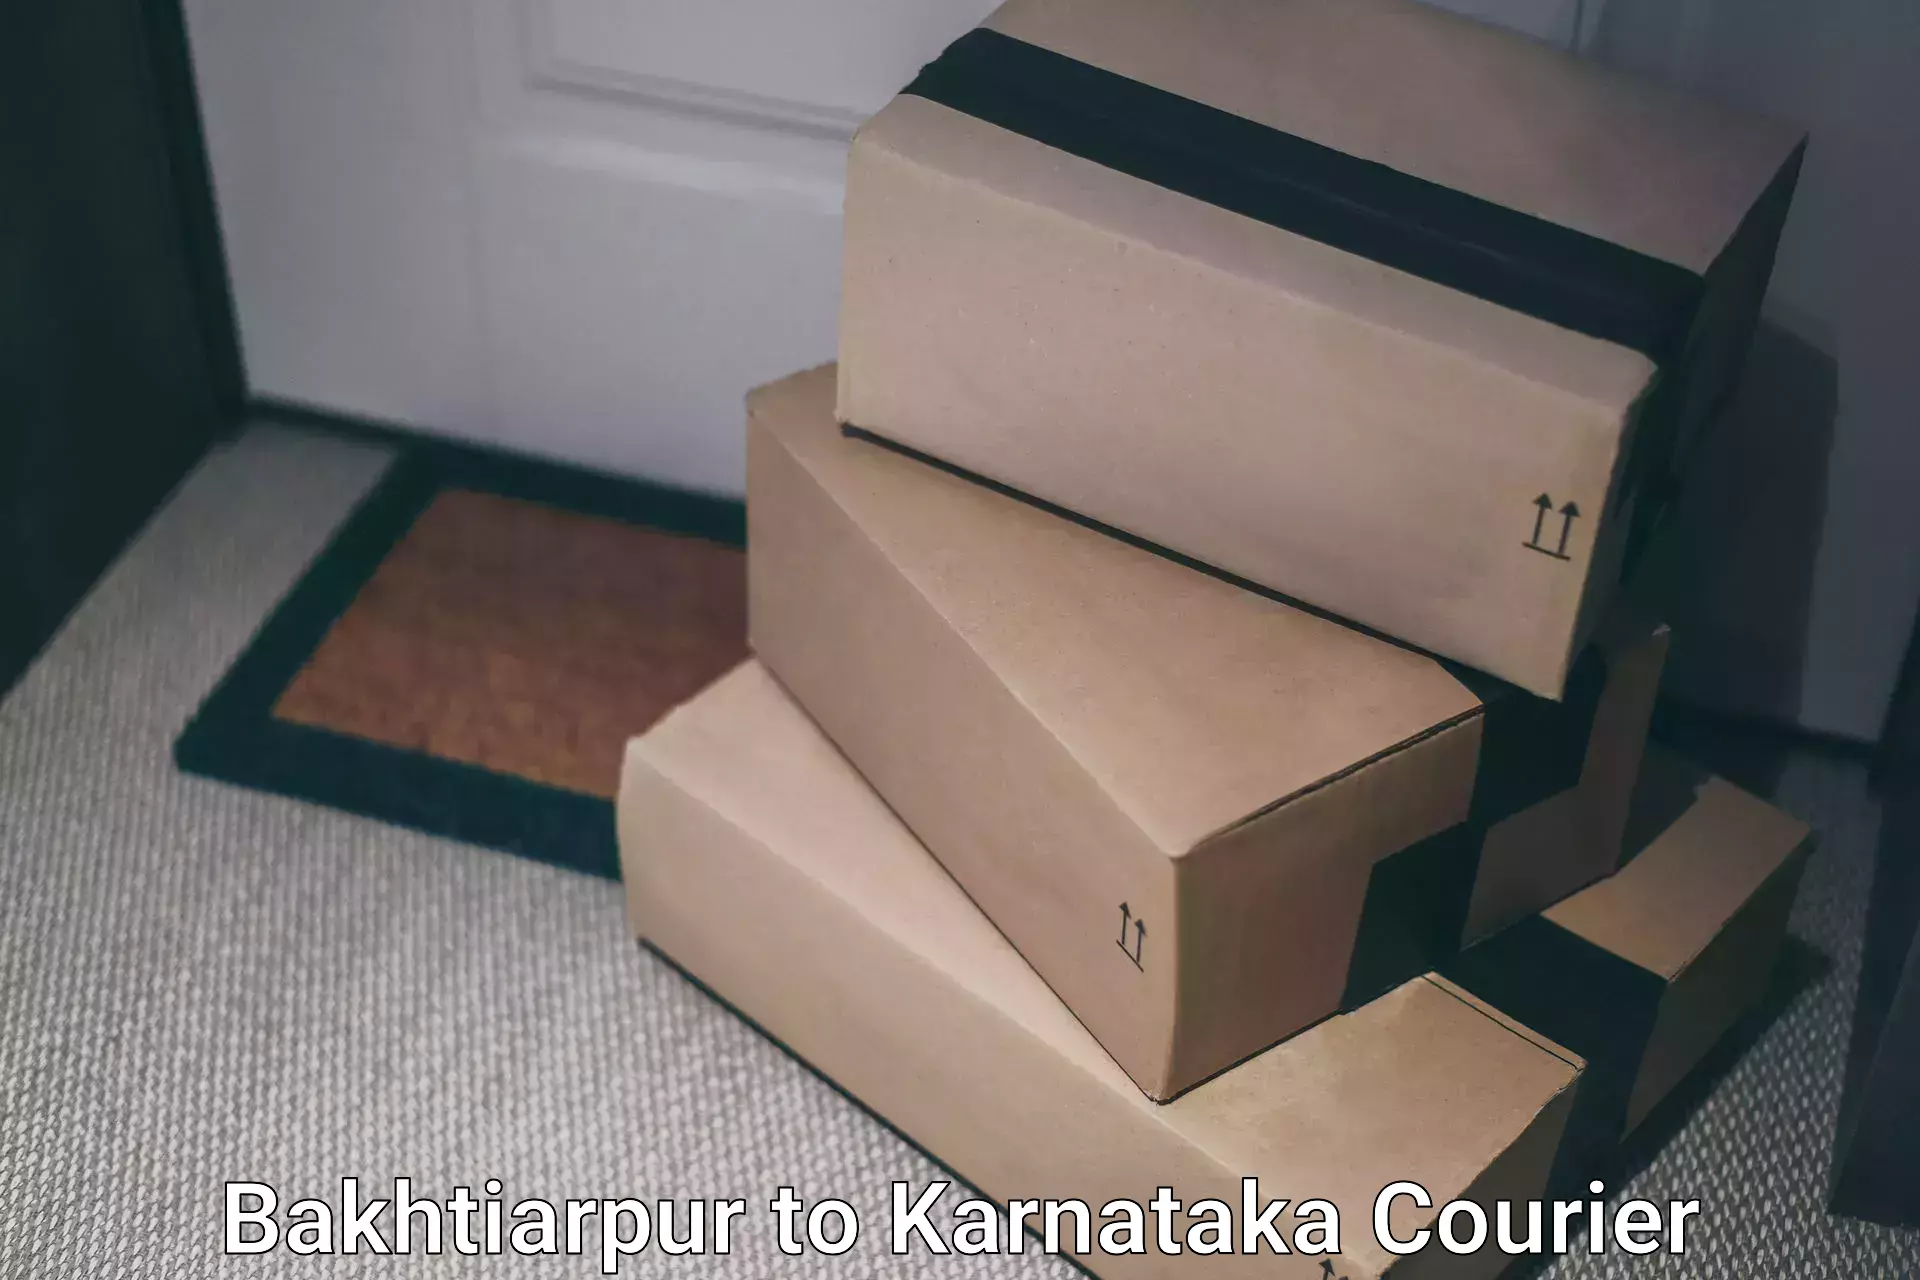 Nationwide delivery network Bakhtiarpur to Ankola